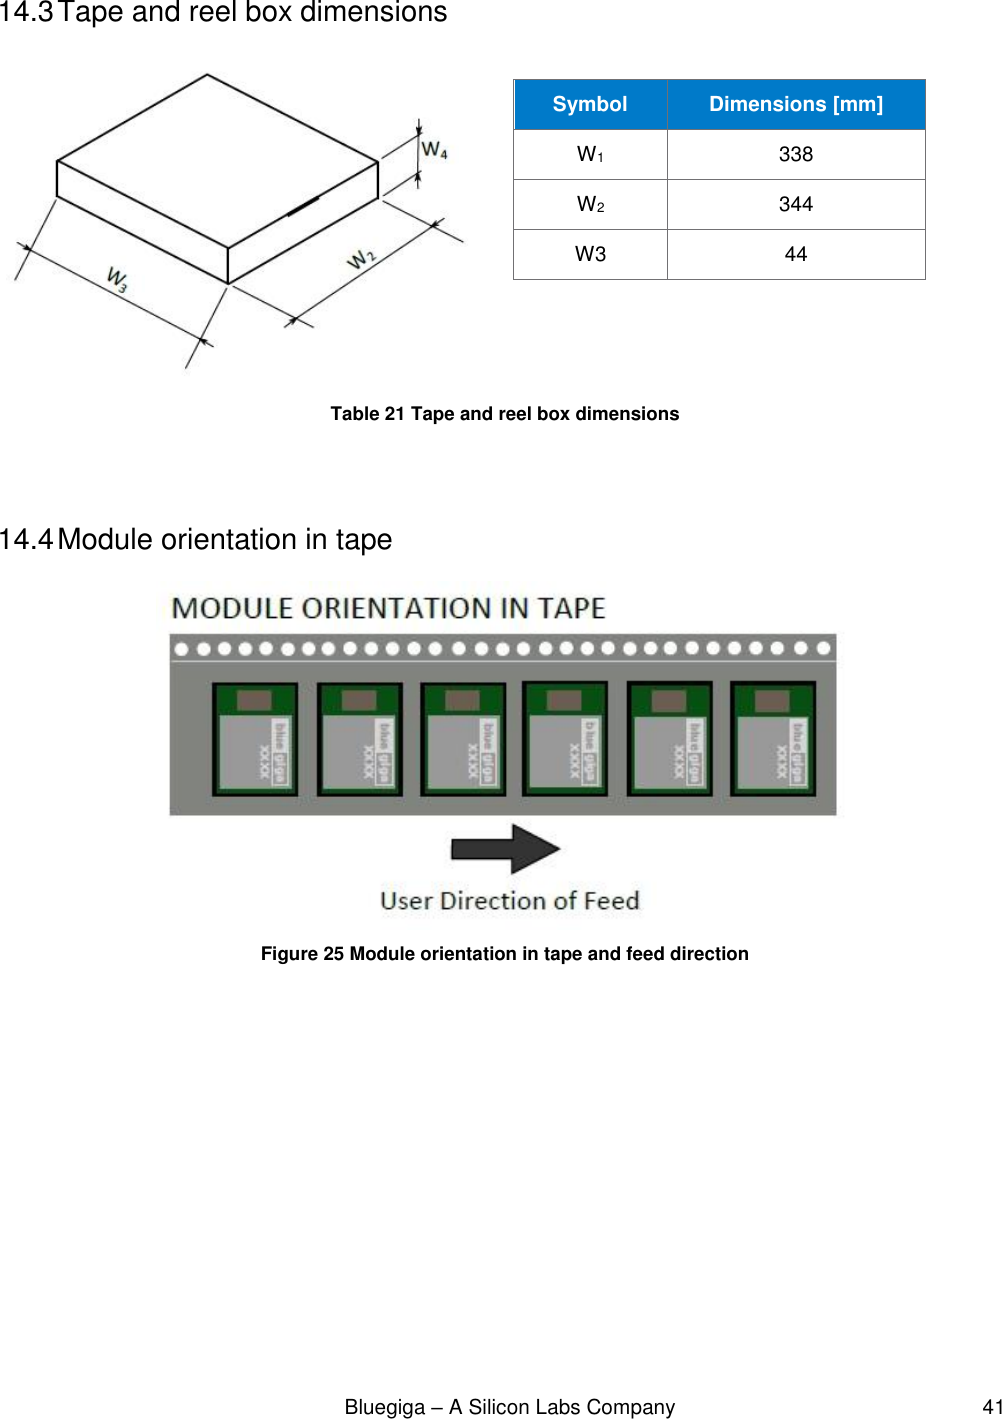                                                              Bluegiga – A Silicon Labs Company                                                     41  14.3 Tape and reel box dimensions  Table 21 Tape and reel box dimensions   14.4 Module orientation in tape  Figure 25 Module orientation in tape and feed direction          Symbol Dimensions [mm] W1 338 W2 344 W3 44  